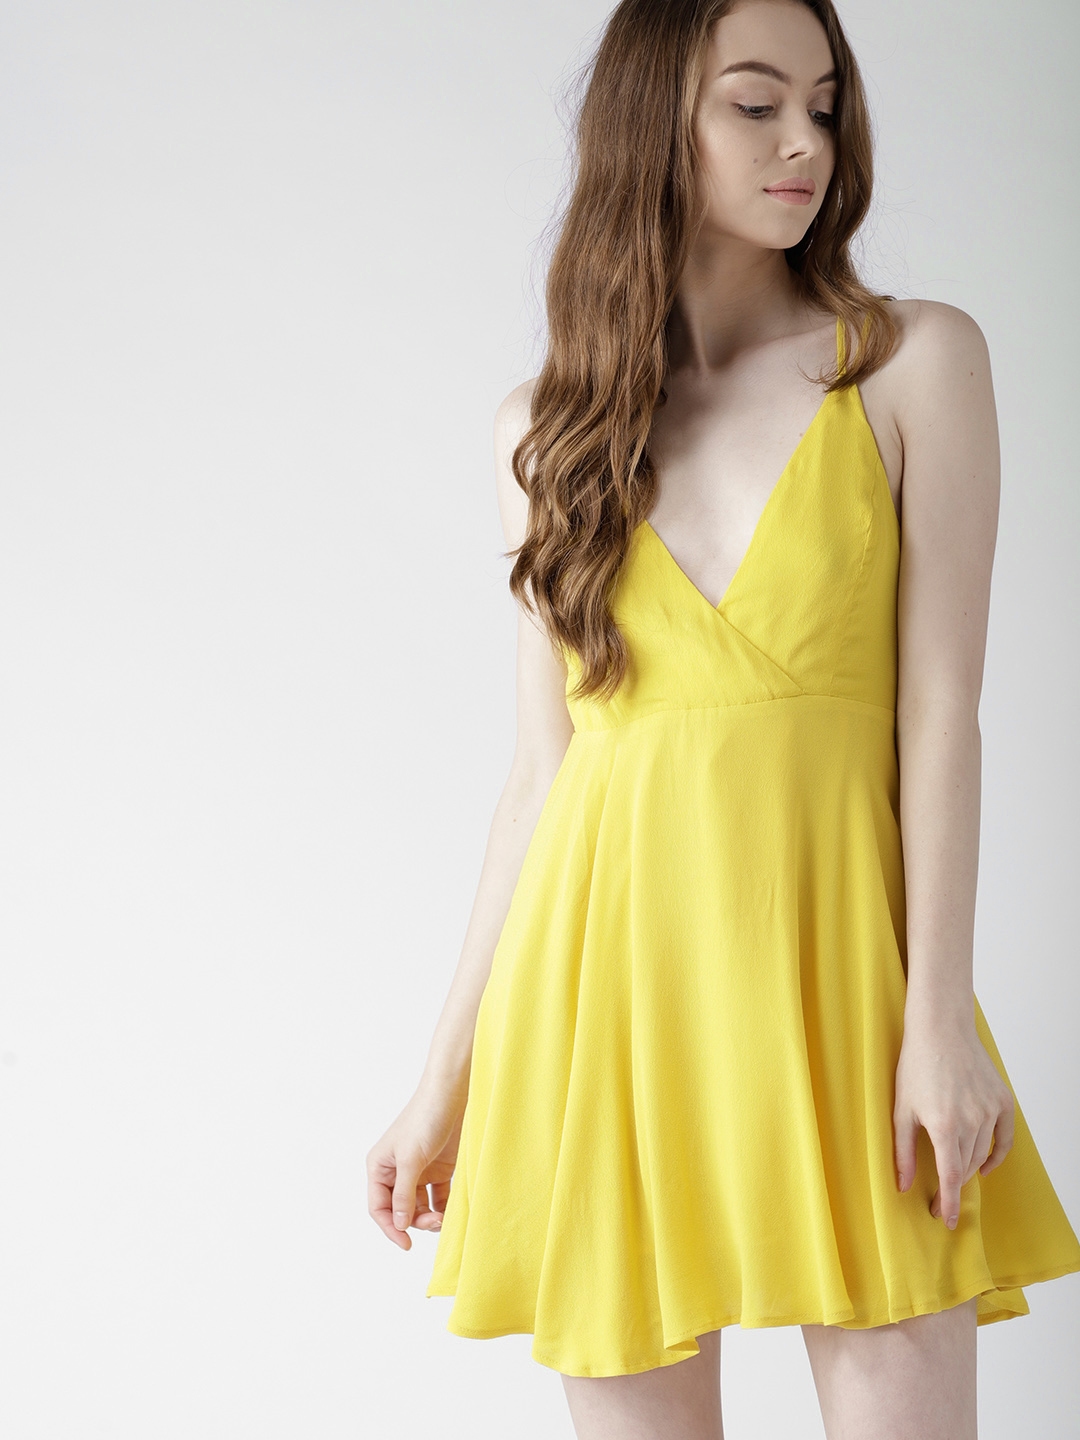 NWT Forever 21 Neon Yellow Halter Mini Dress - small | eBay